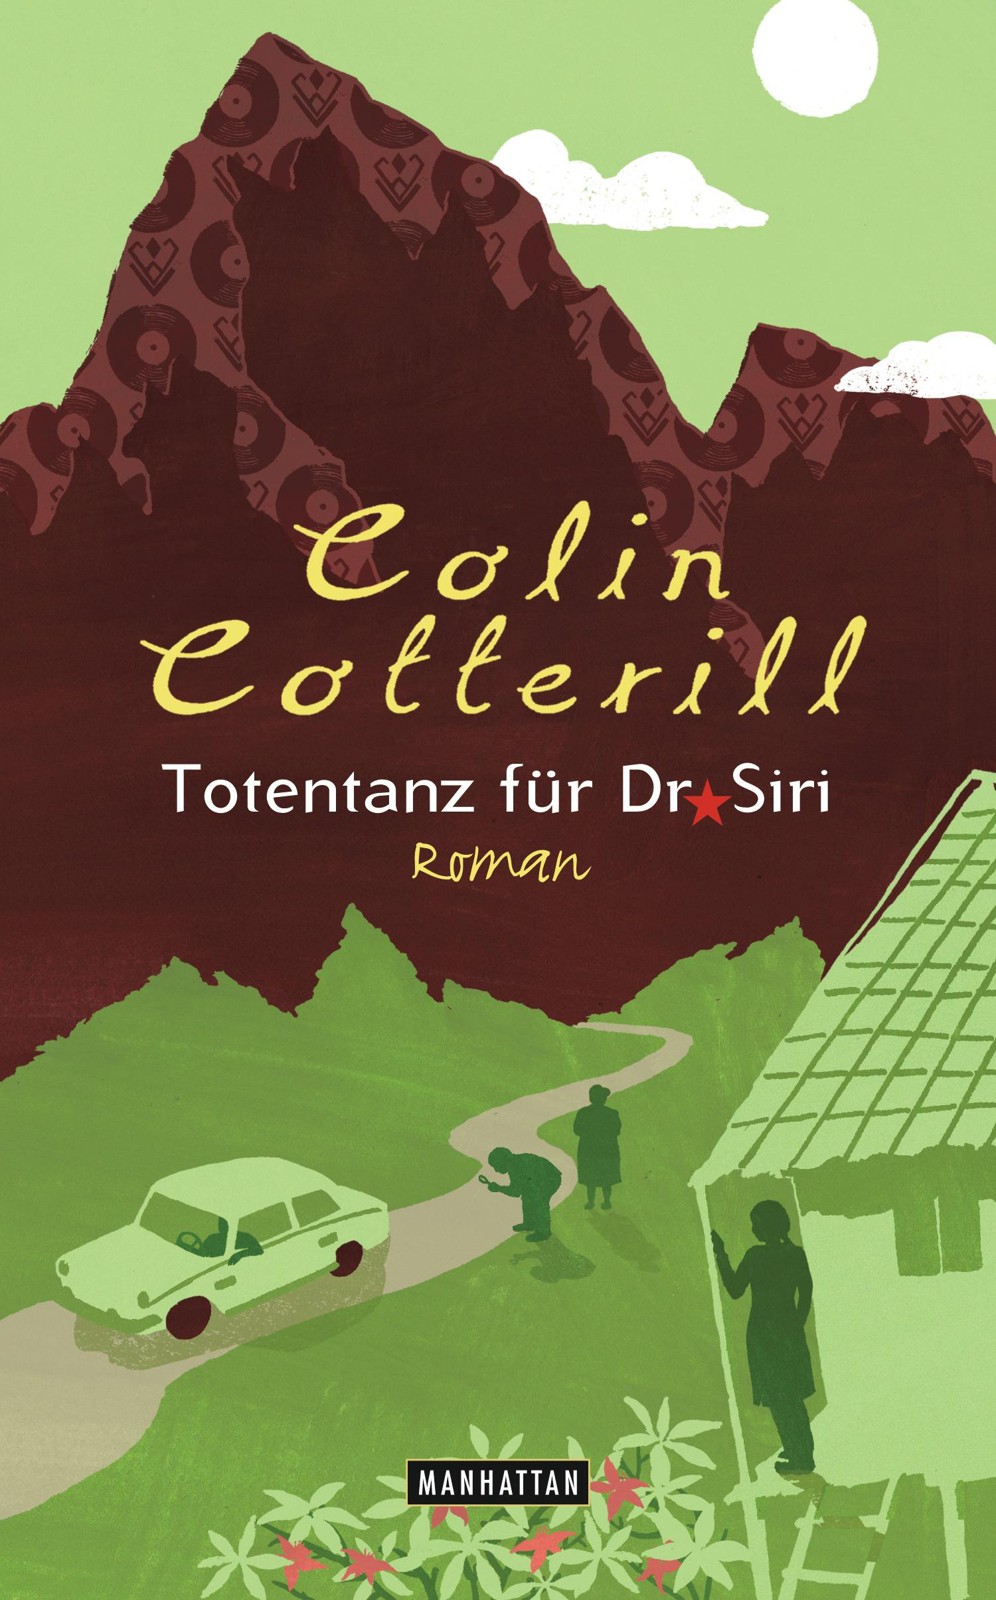 Cotterill Colin - Totentanz für Dr. Siri скачать бесплатно